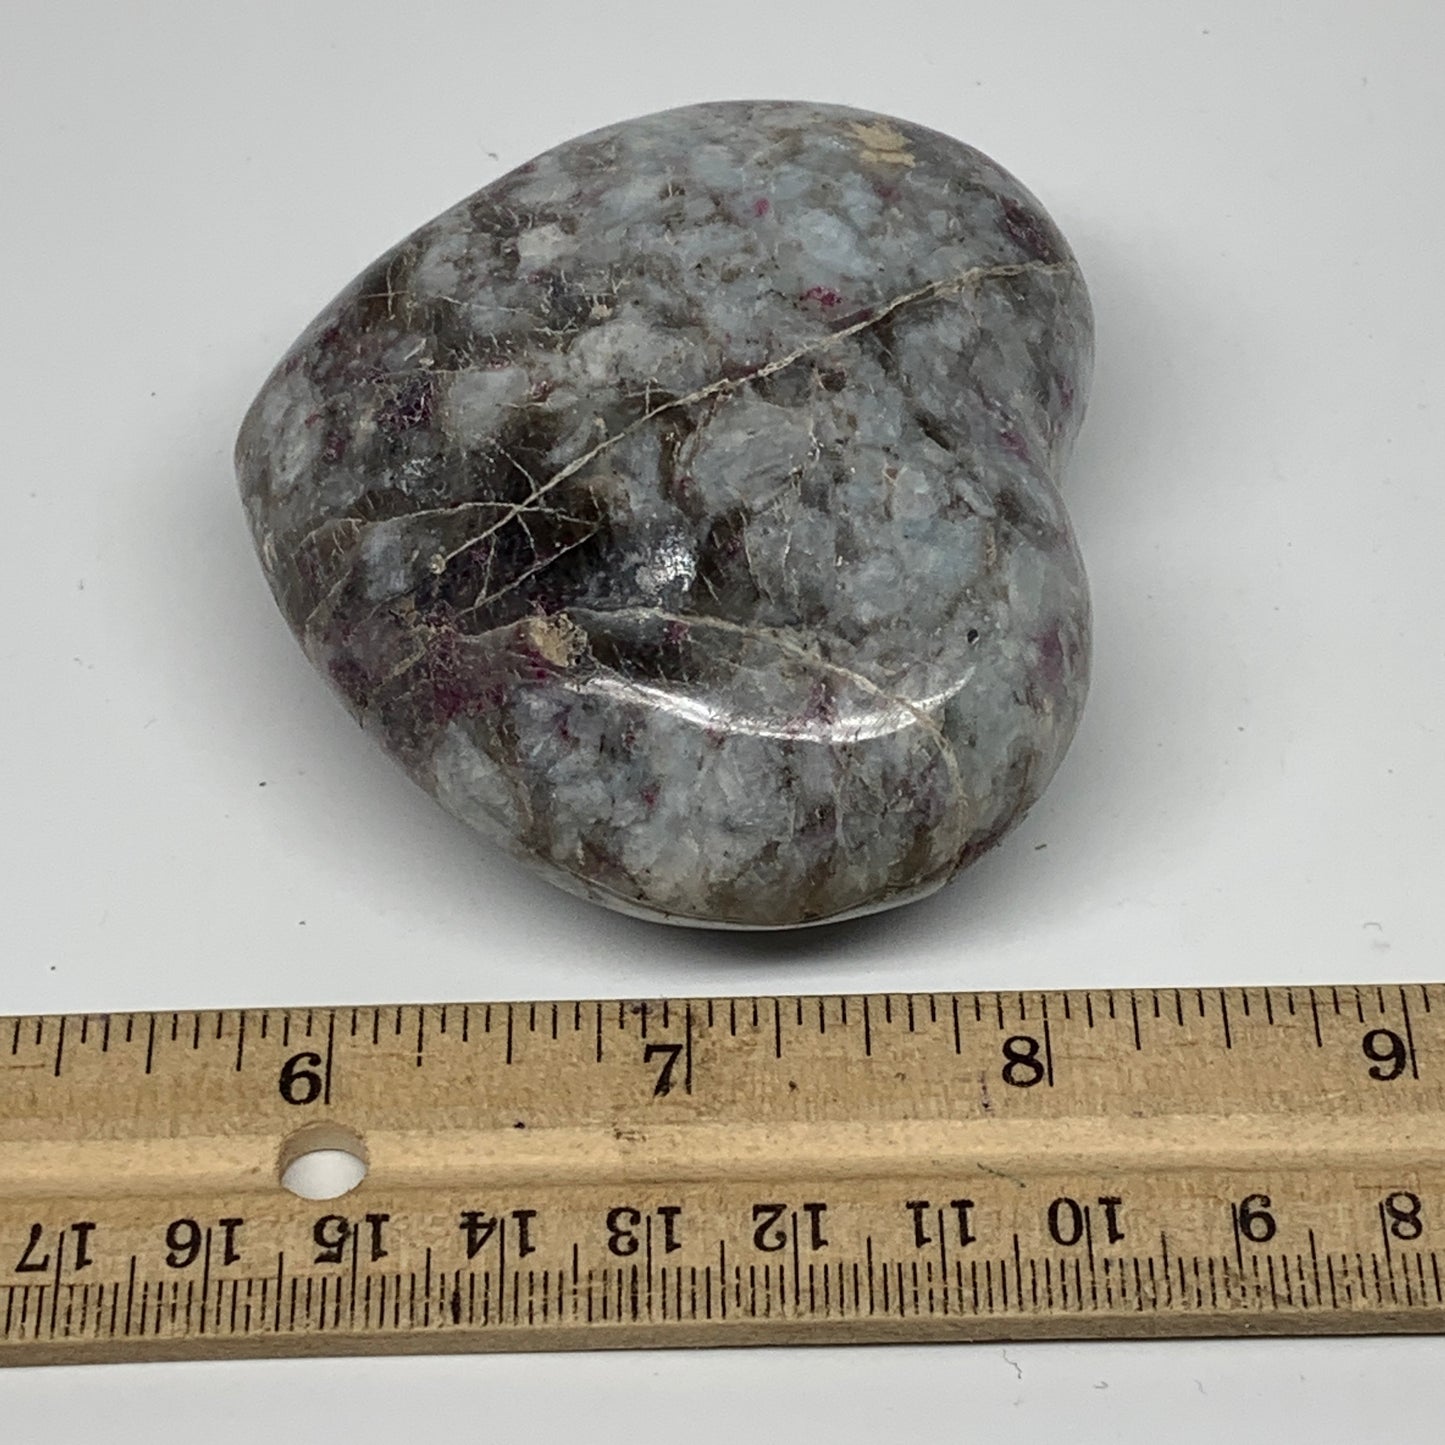 224.5g, 2.5"x2.9"x1.3" Rubellite Heart Polished Healing Crystal Gemstone, B3698